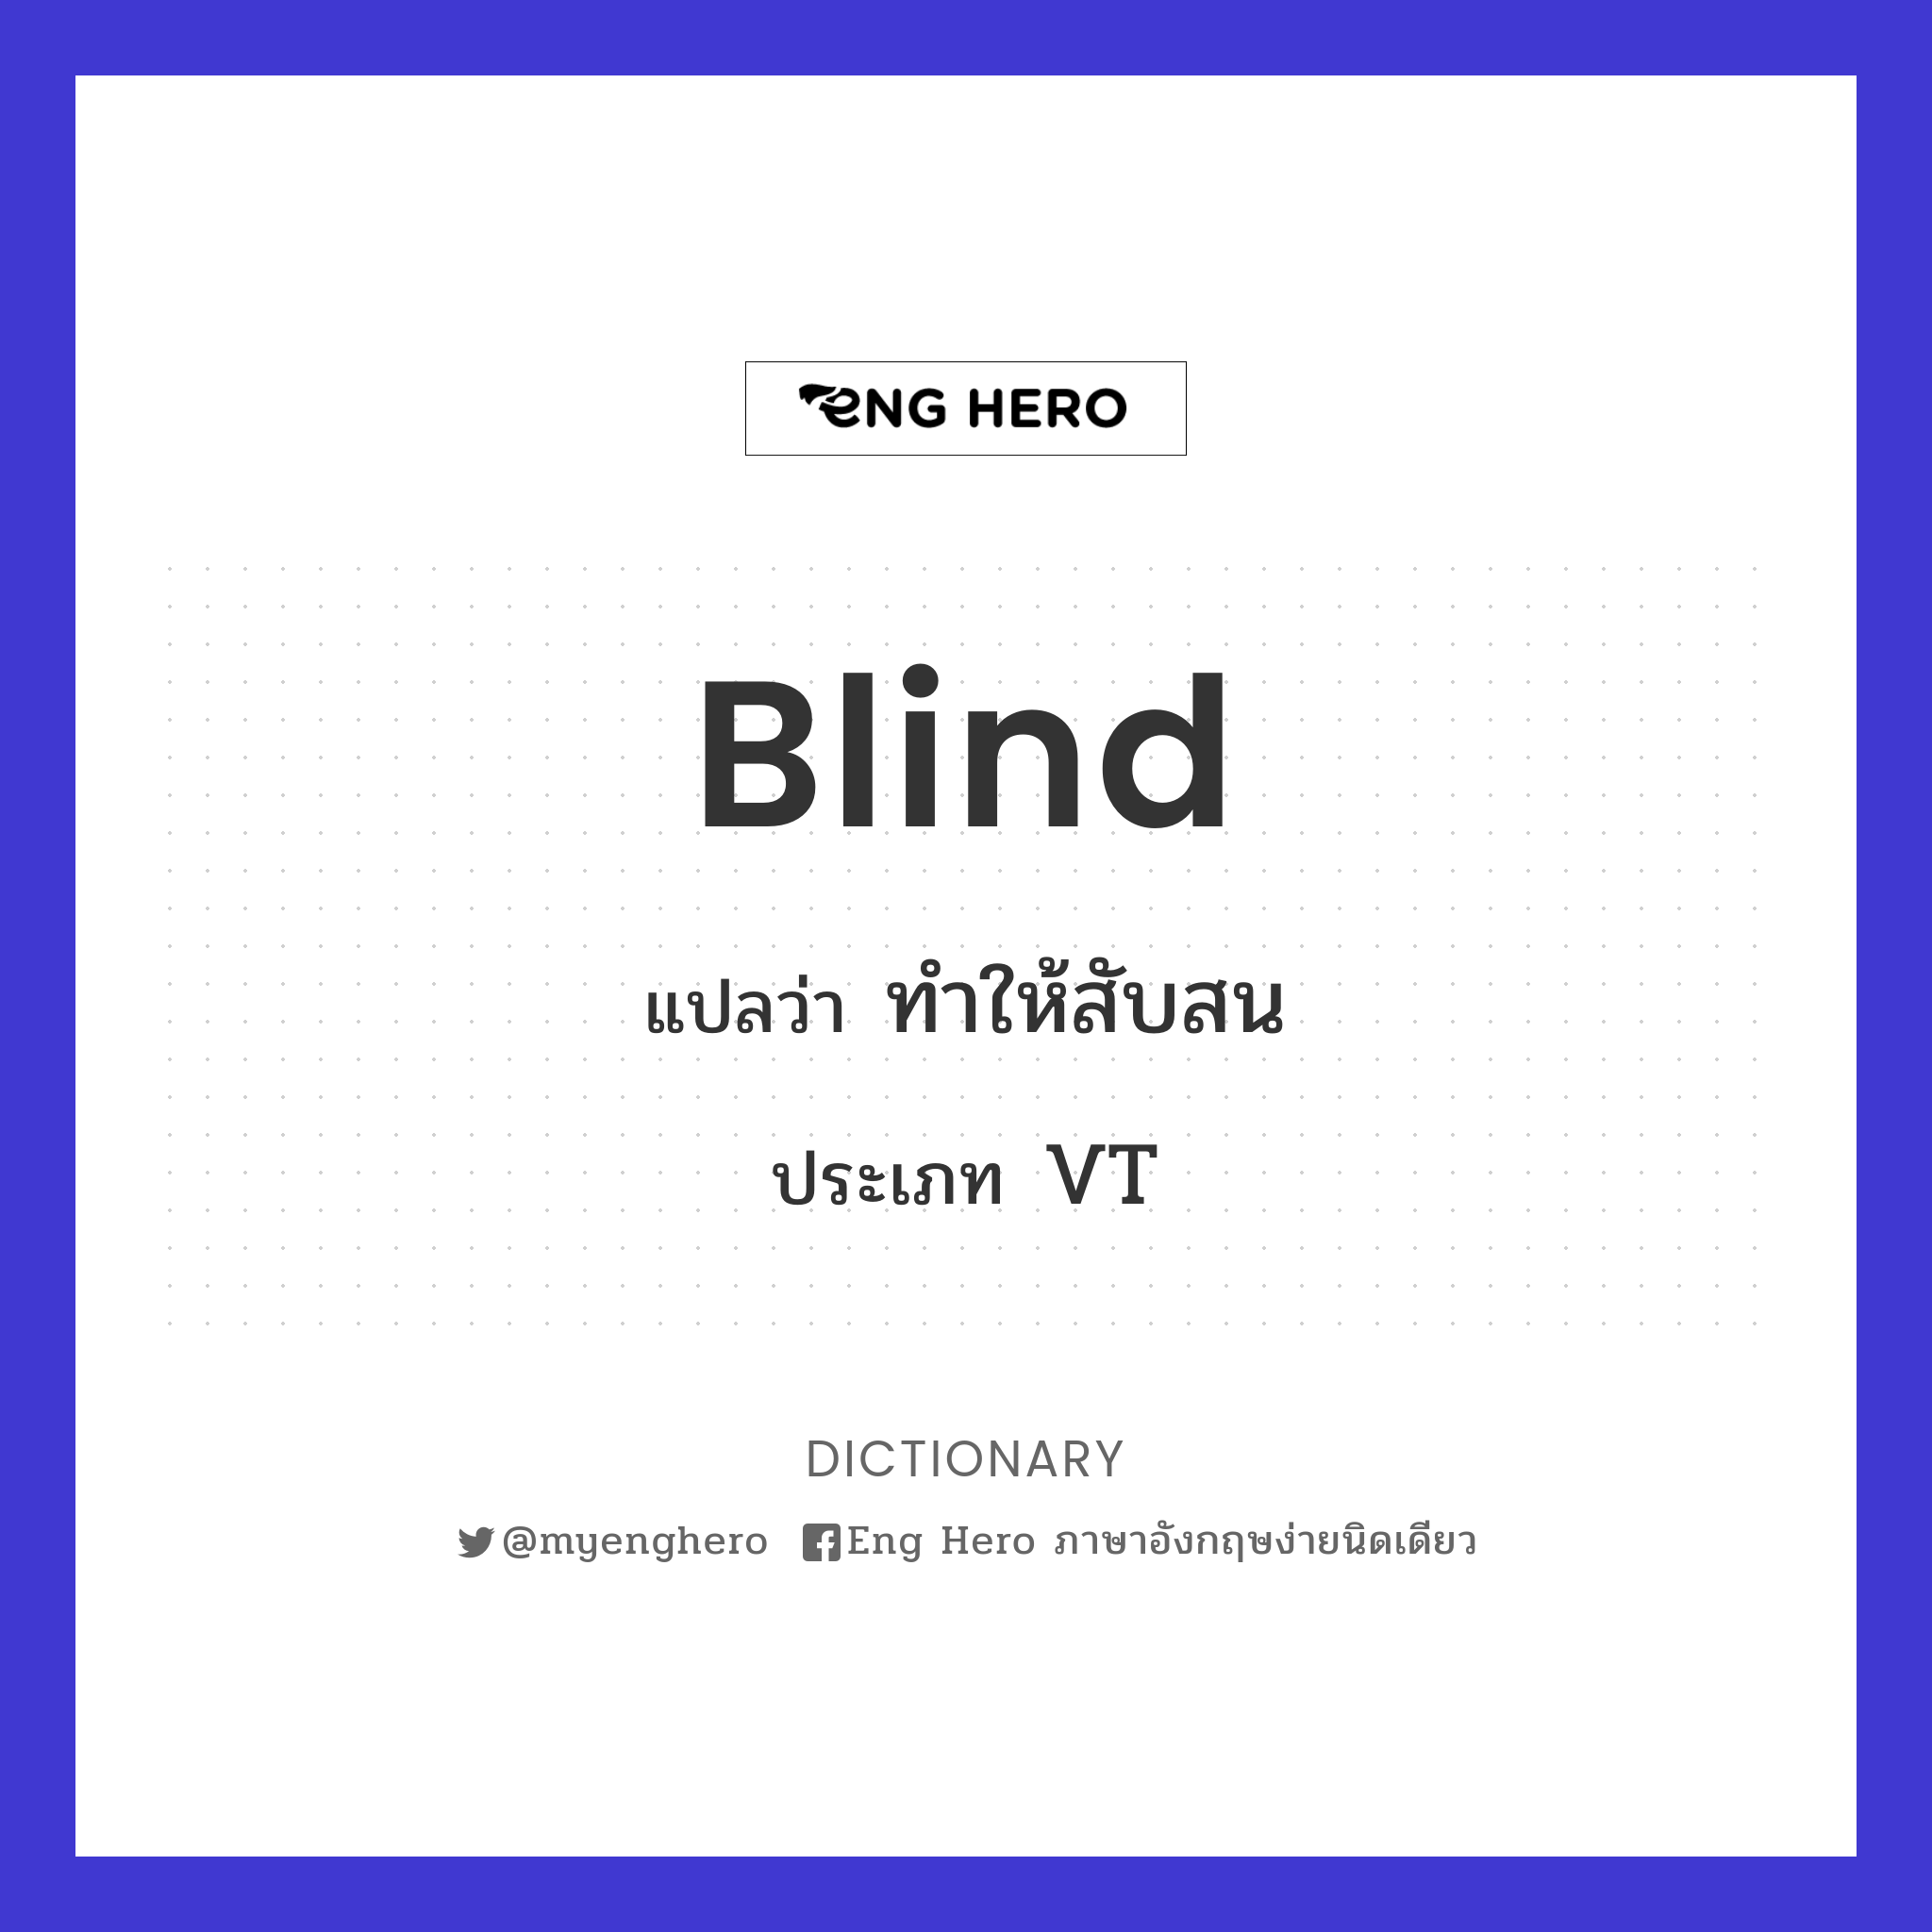 blind